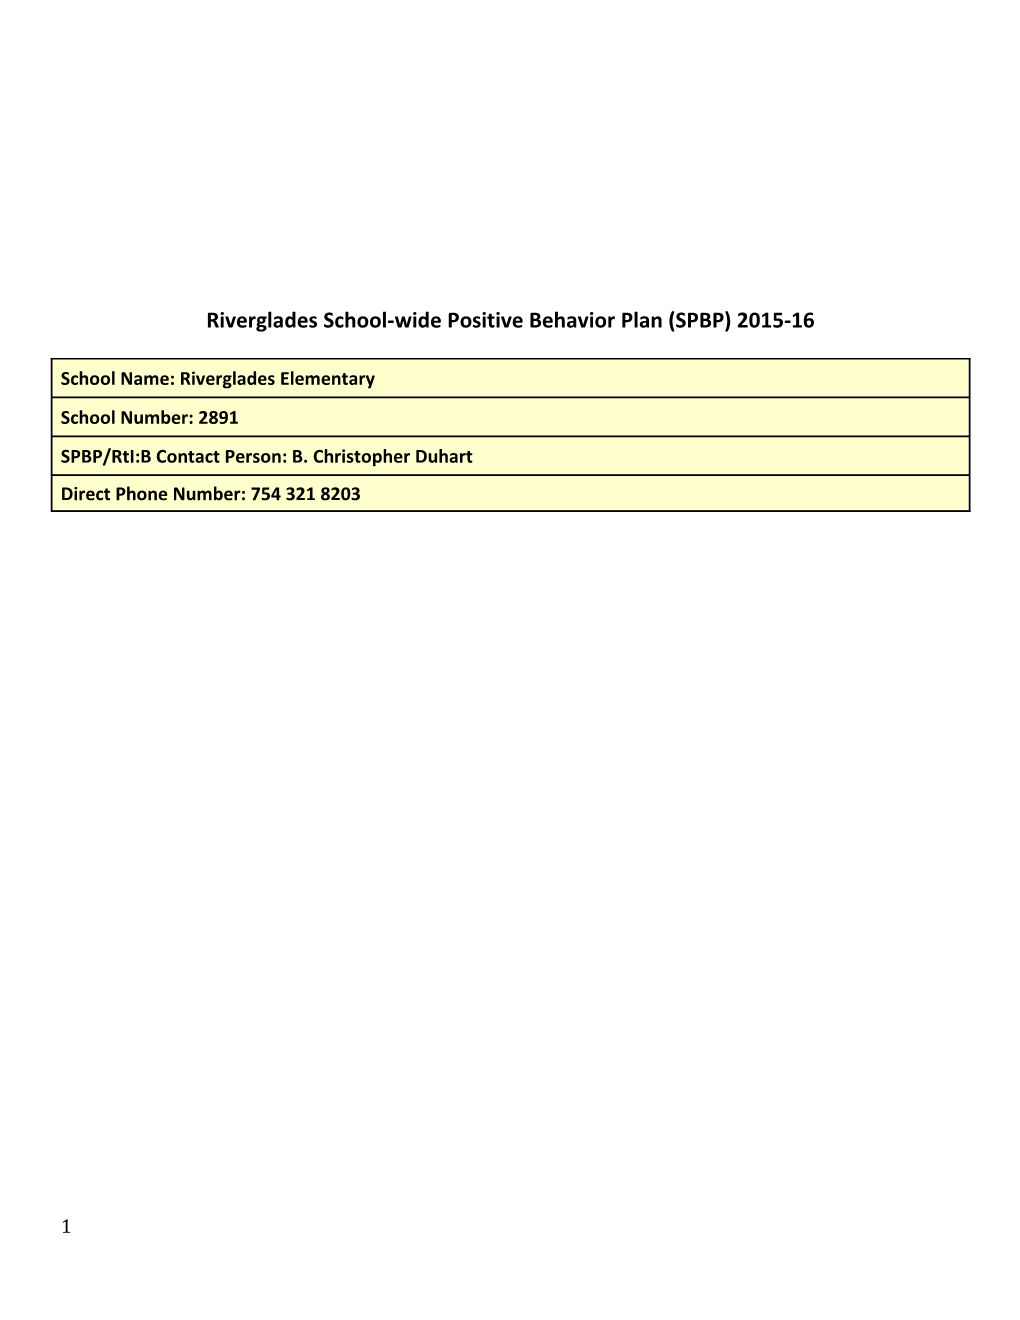 Riverglades School-Wide Positive Behavior Plan (SPBP) 2015-16